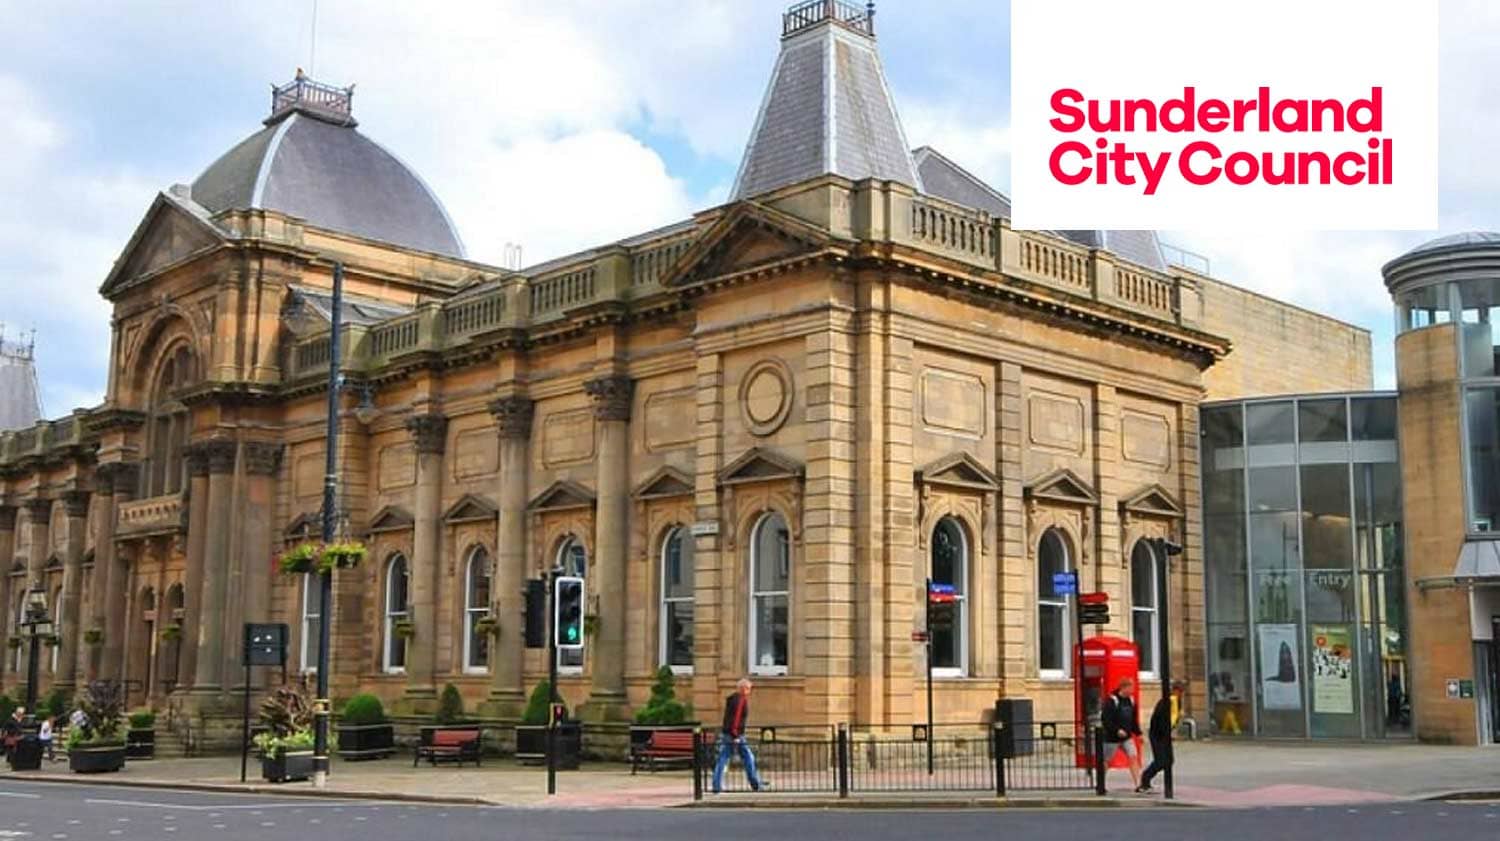 Scientology event at Sunderland City Council Museum